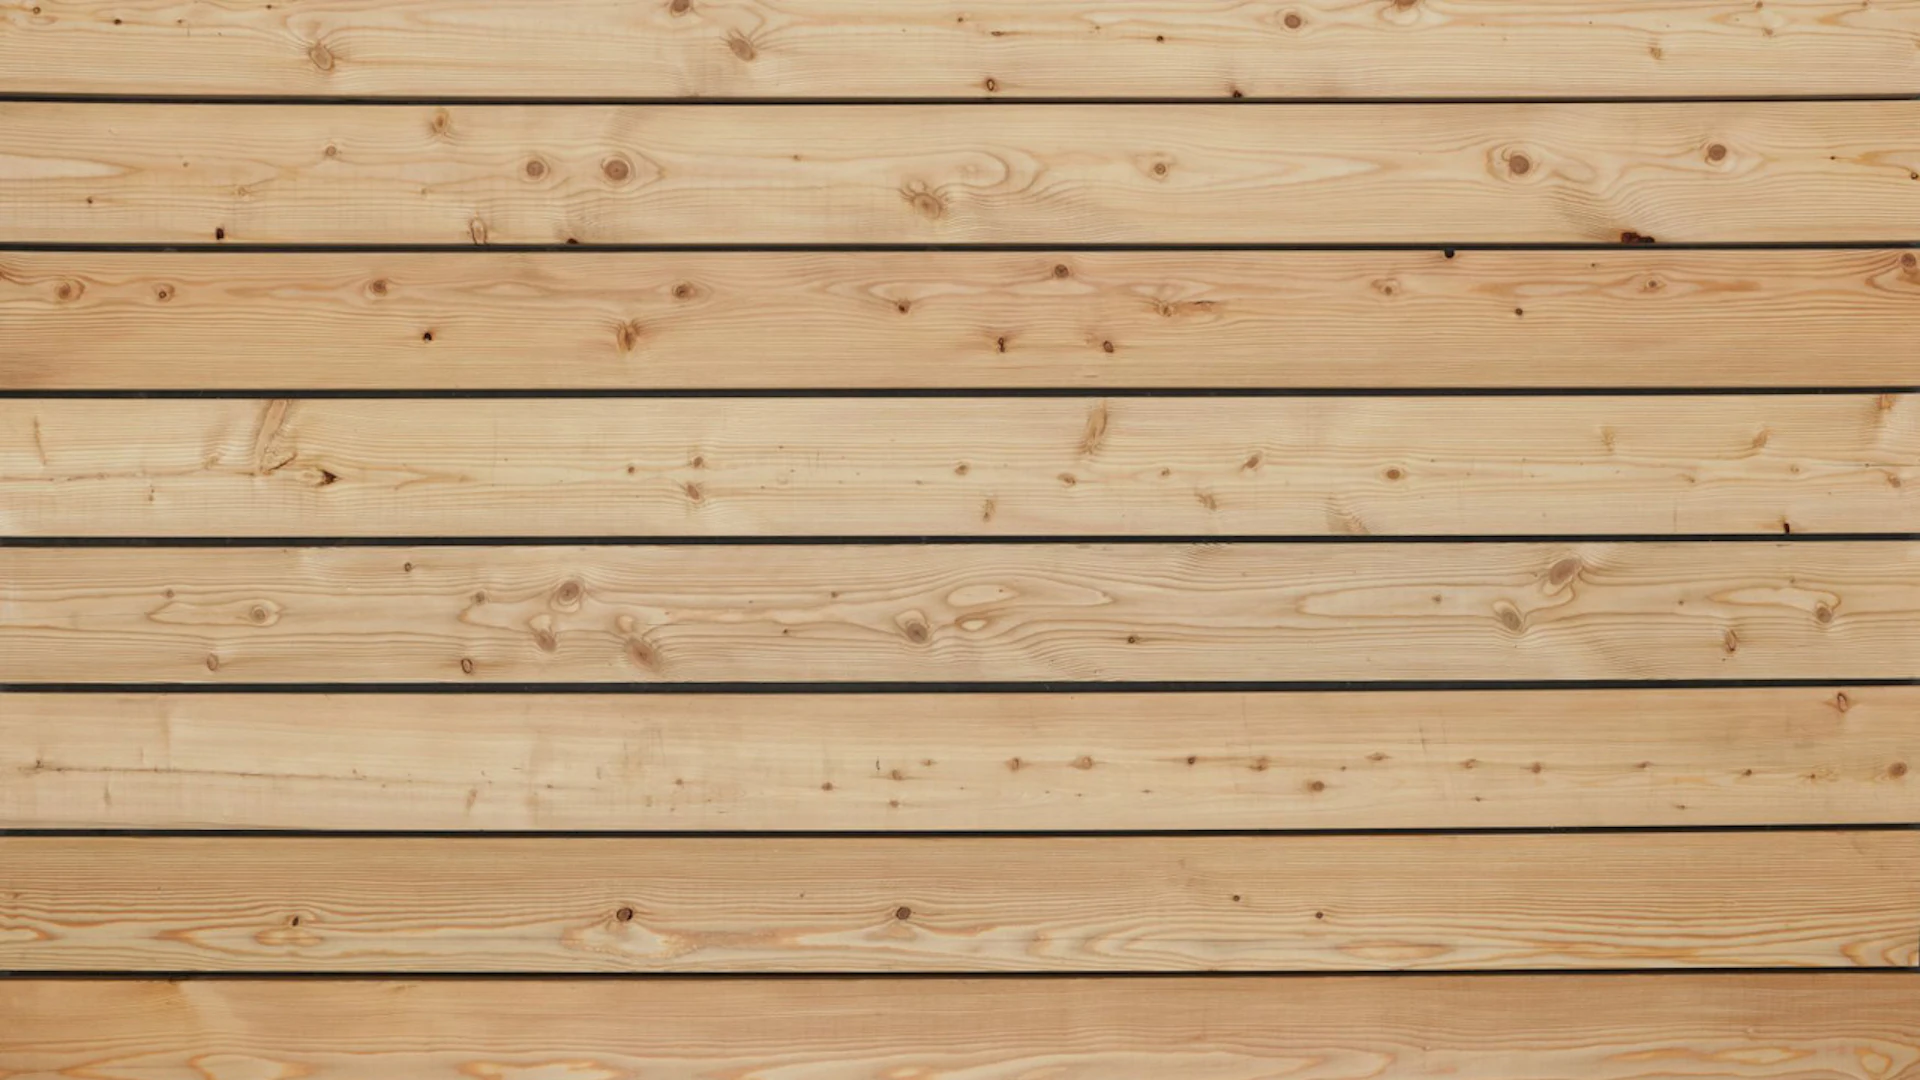 TerraWood decking in legno di larice siberiano A/B 45 x 140mm - liscio su entrambi i lati